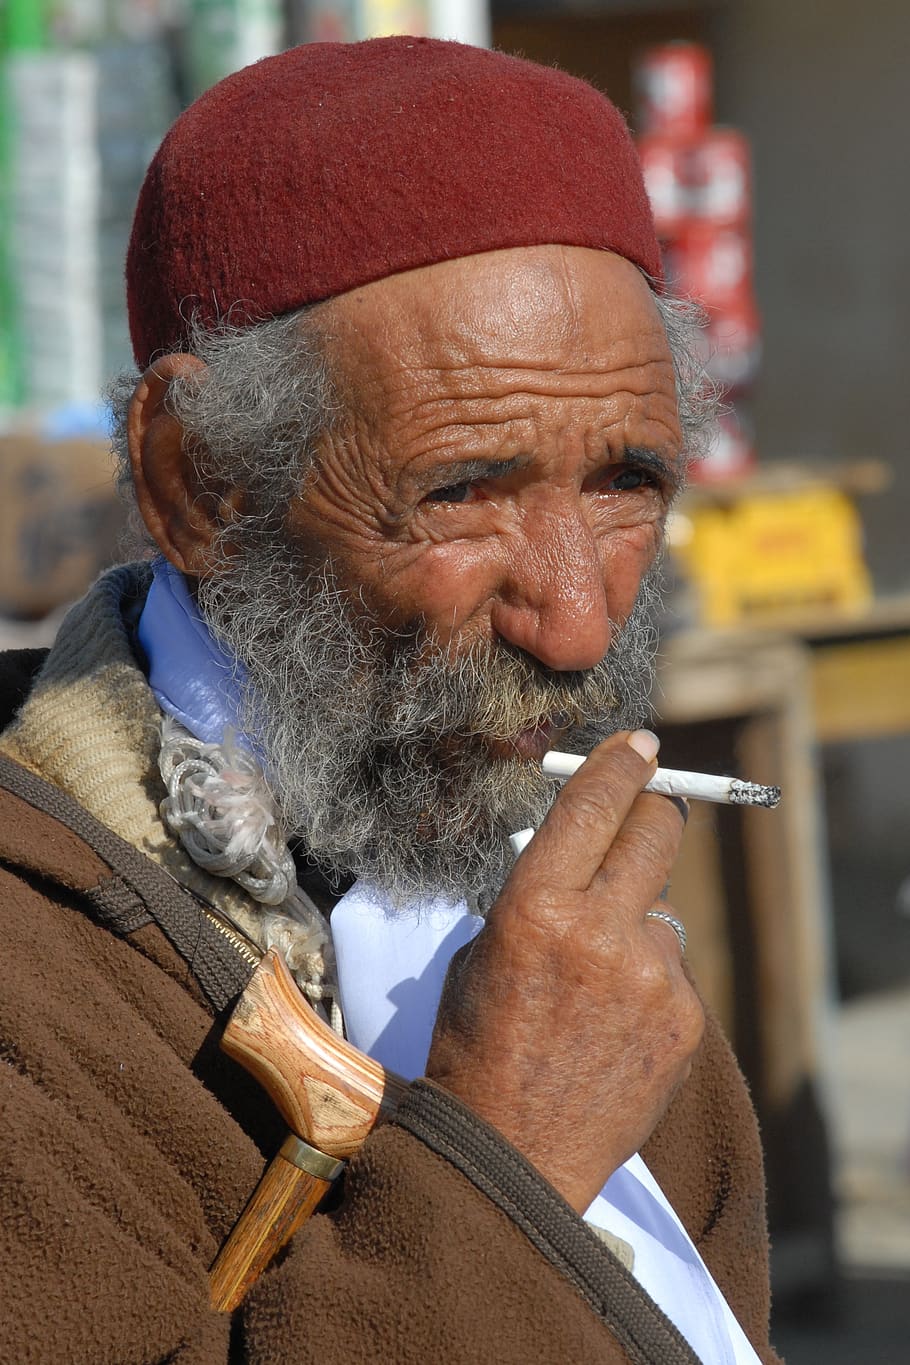 tunisia, man, old, portrait, face, expression, smoking, senior adult, facial hair, beard